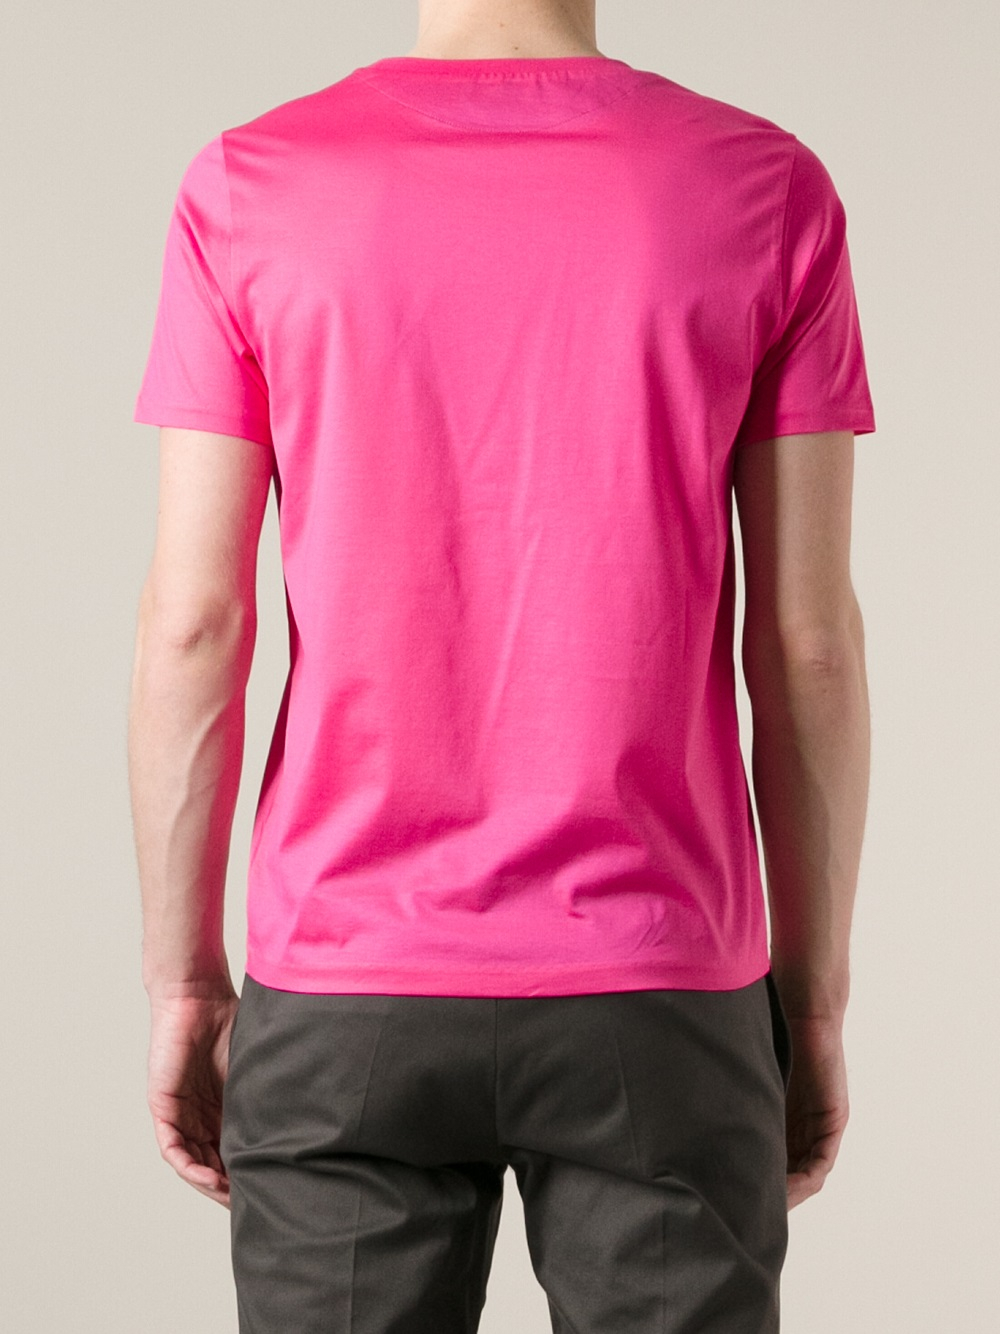 Paul Smith Mushroom Print T-Shirt in Pink for Men - Lyst